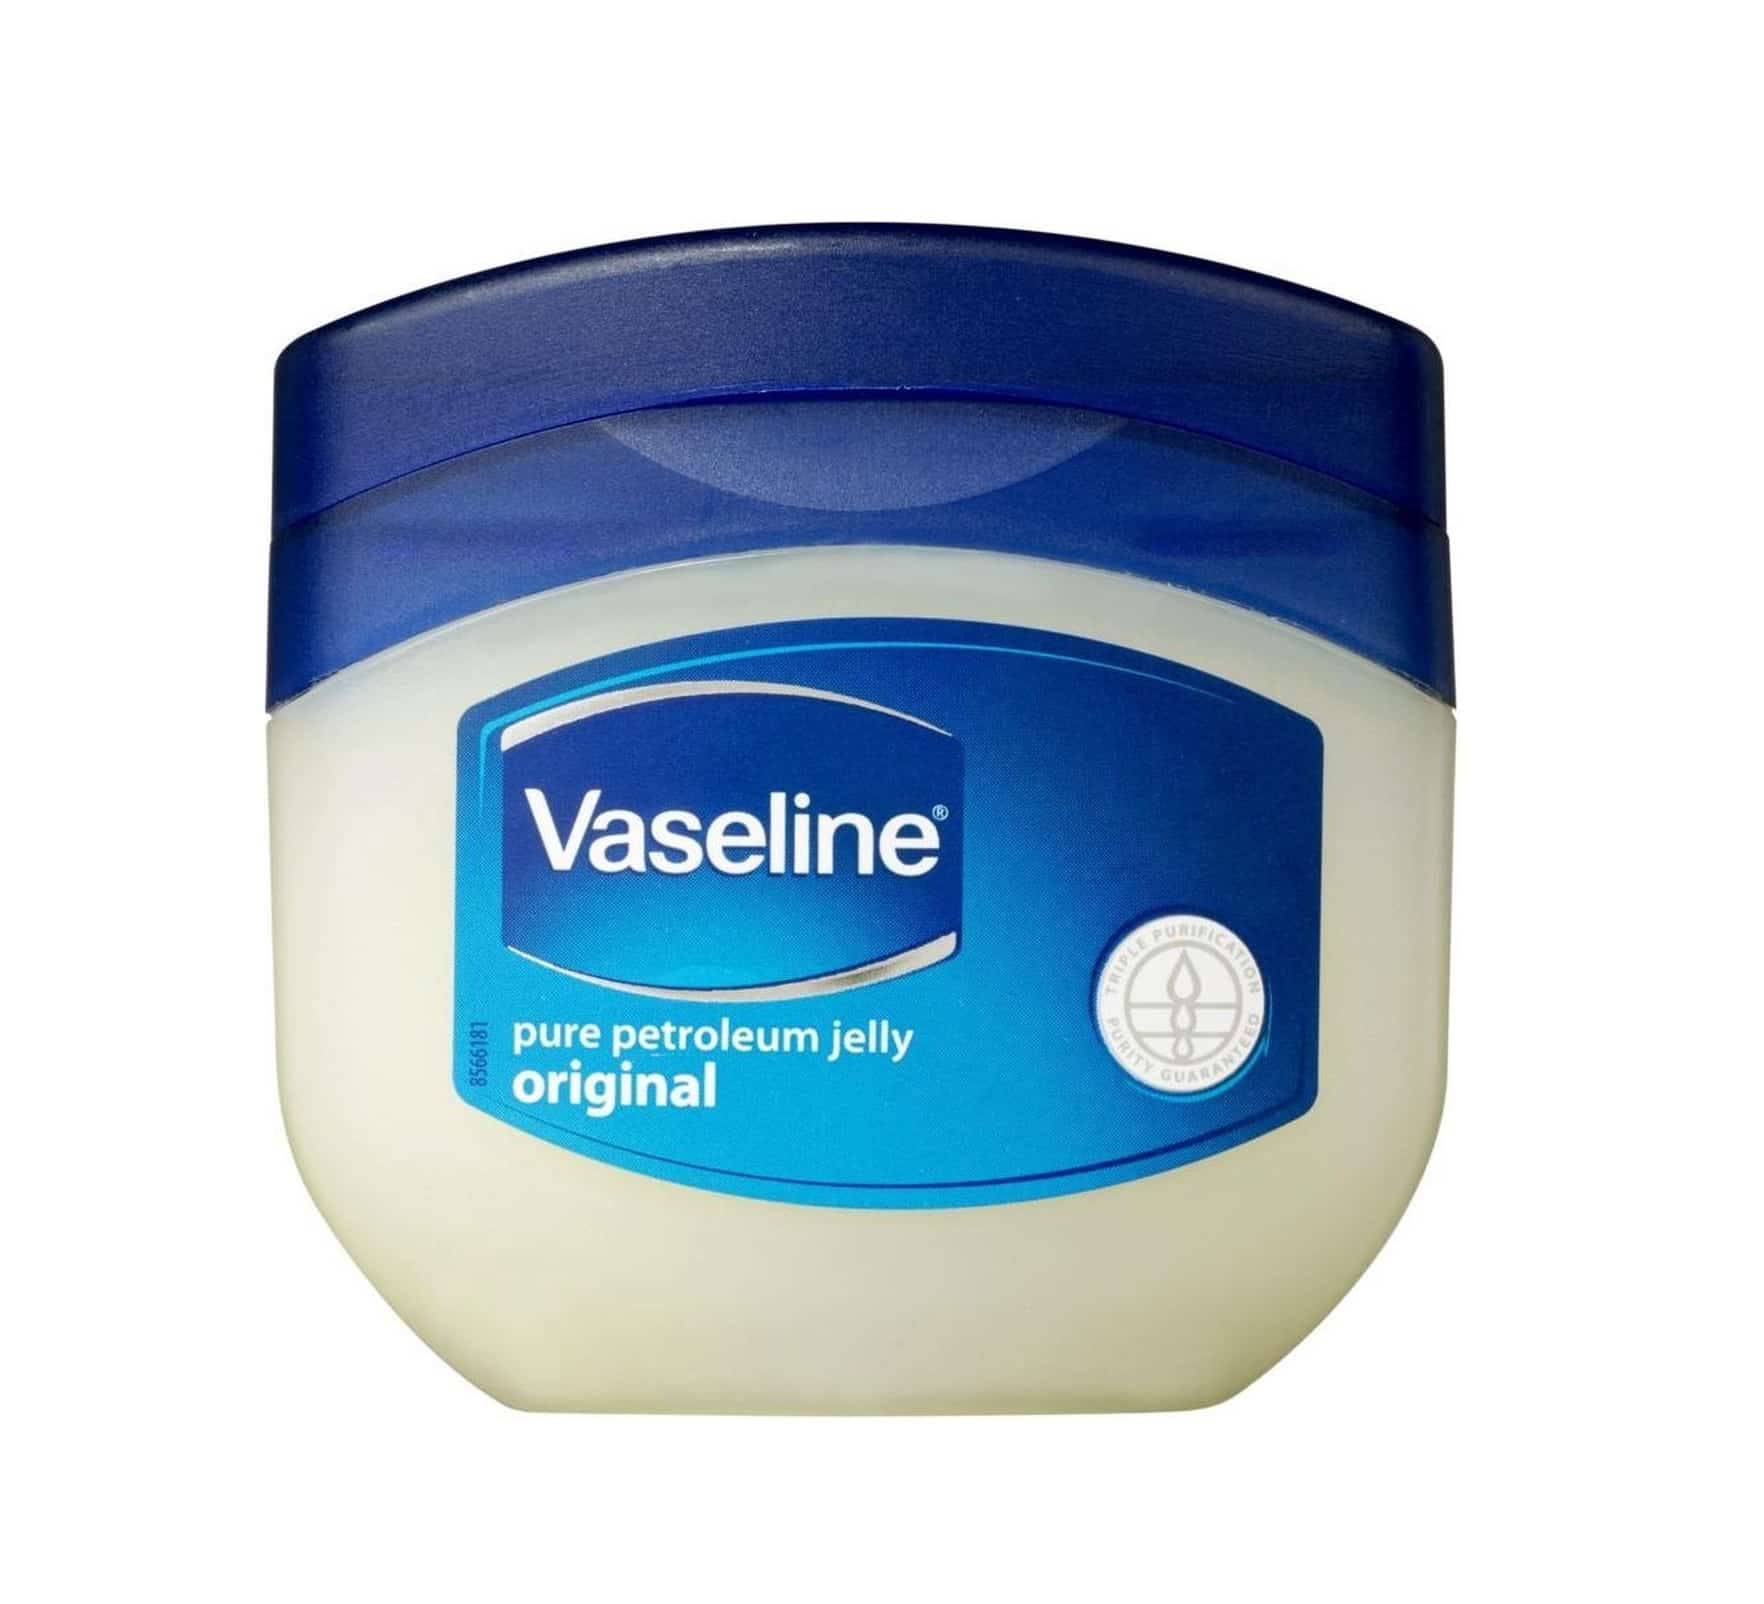 Vaseline Gel Petroleum Original Jelly